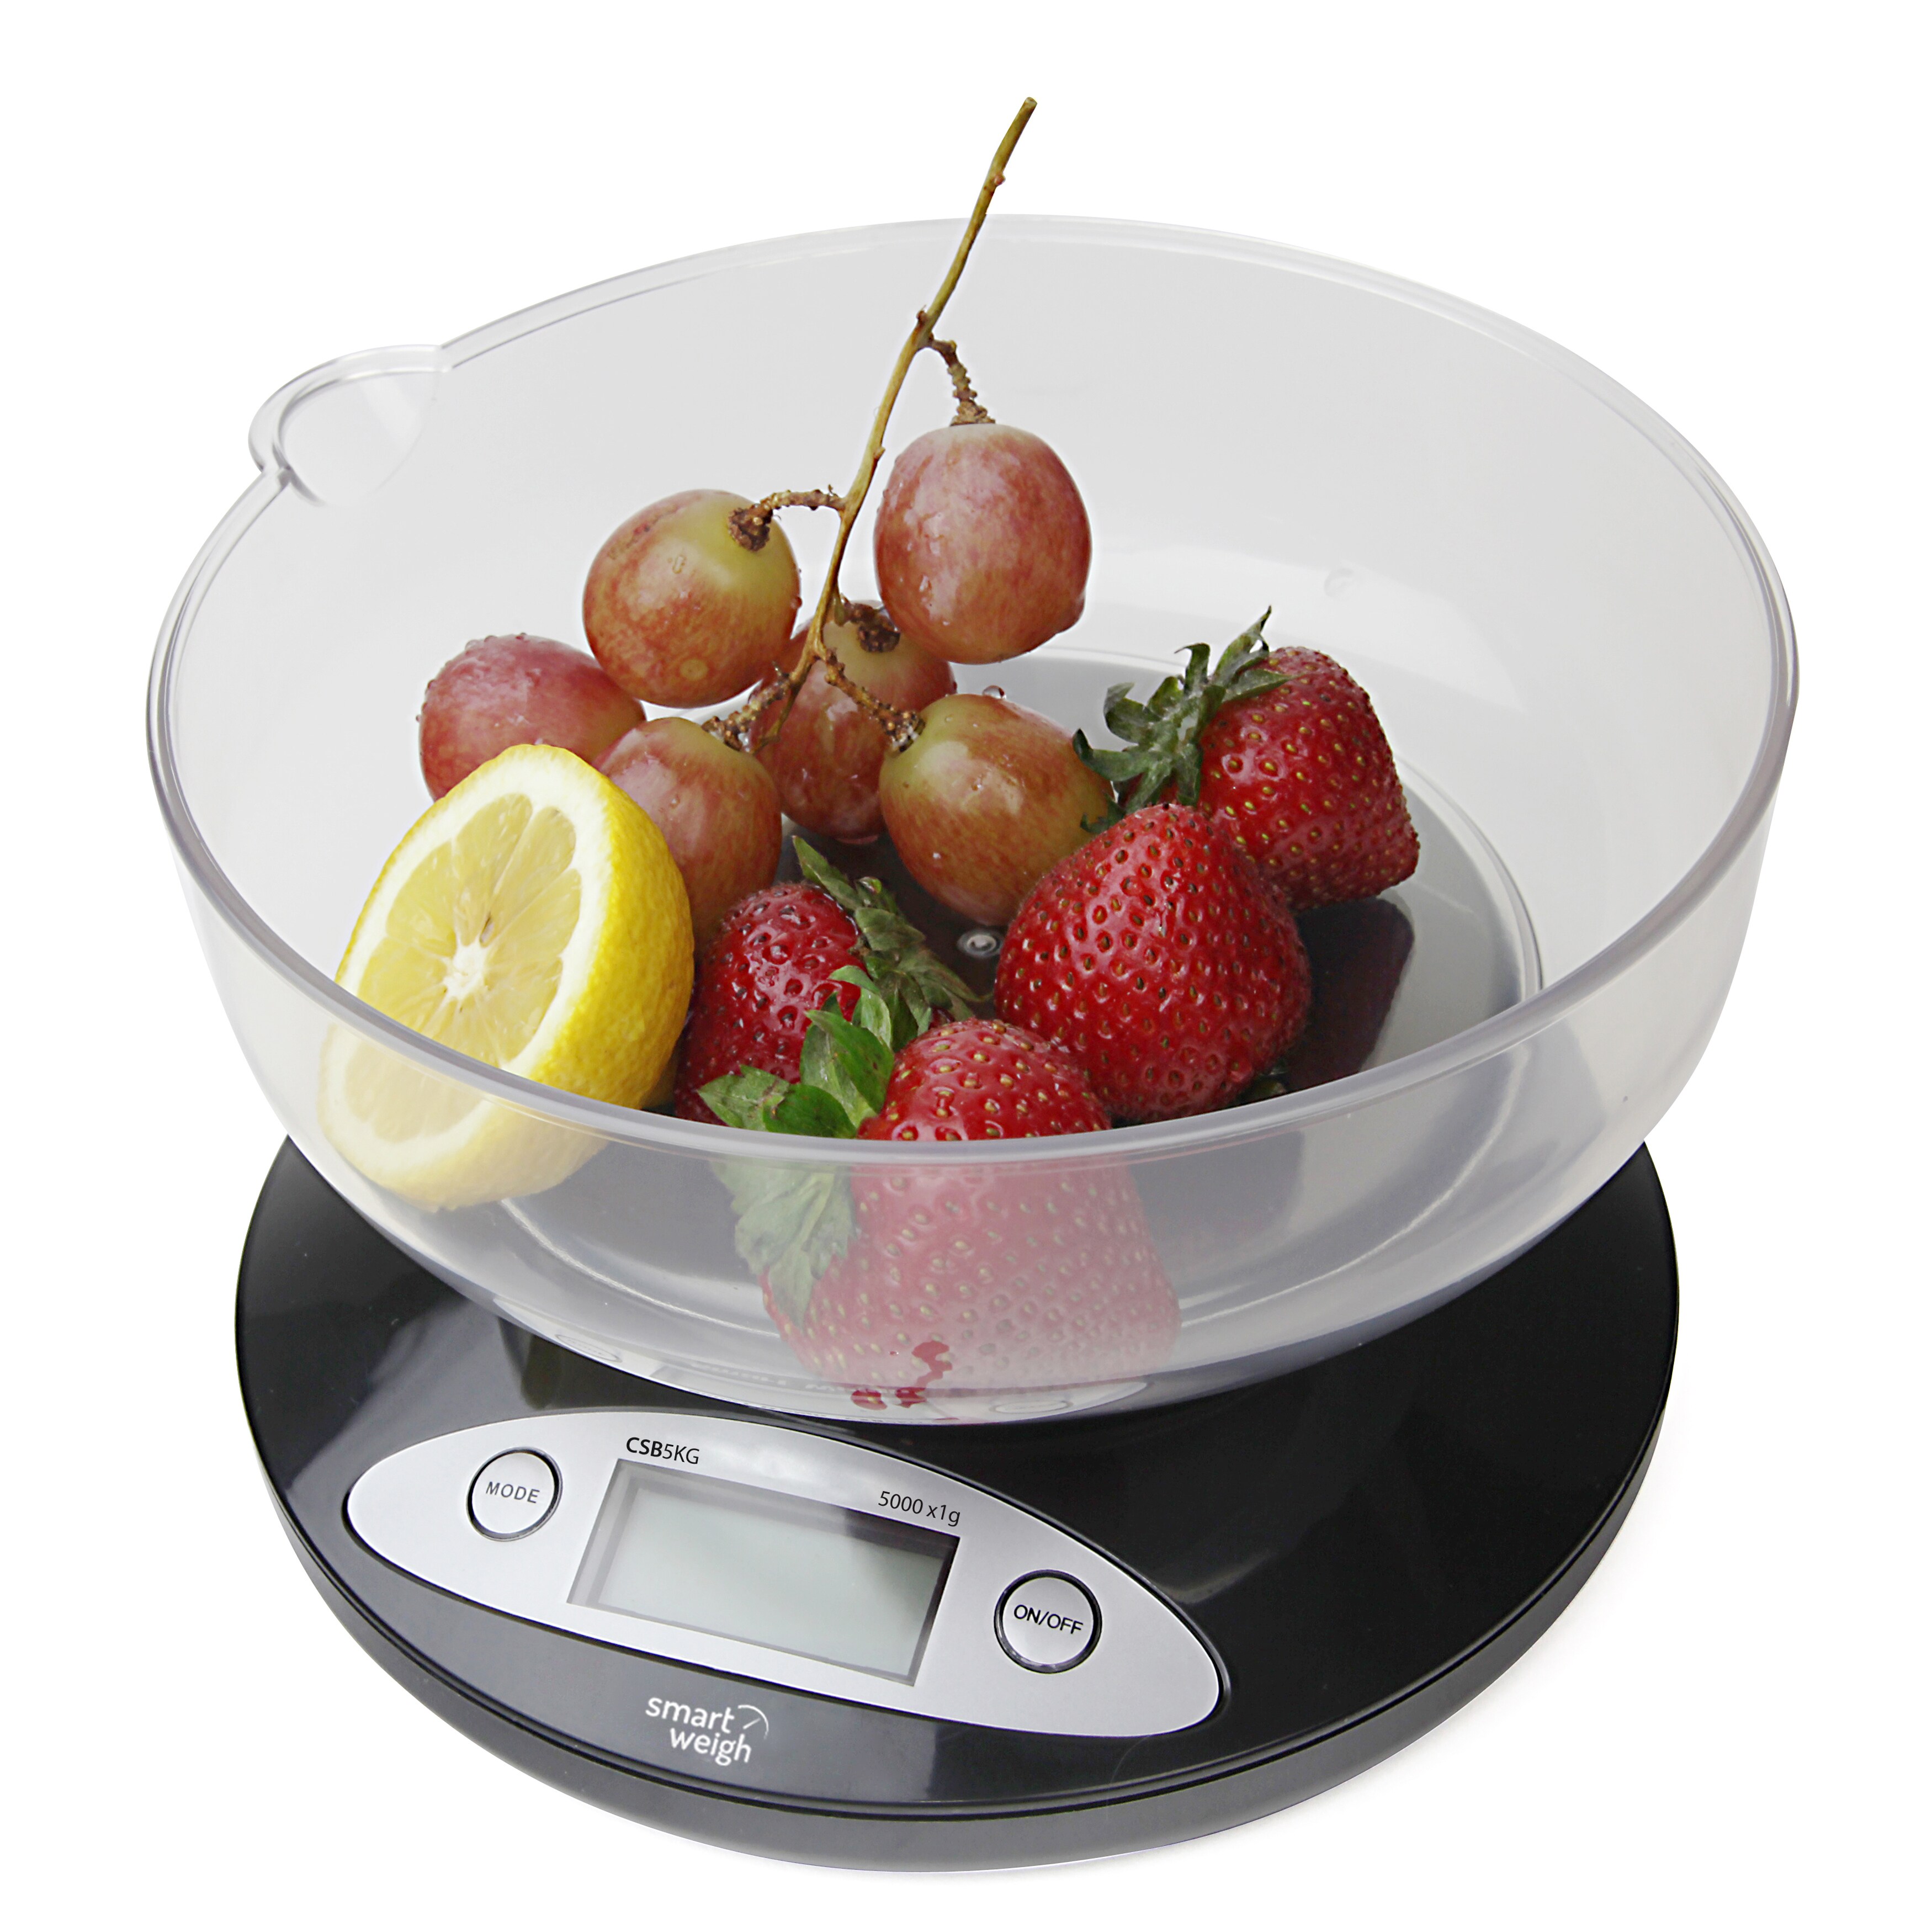 Smart Weigh Digital Food Scale